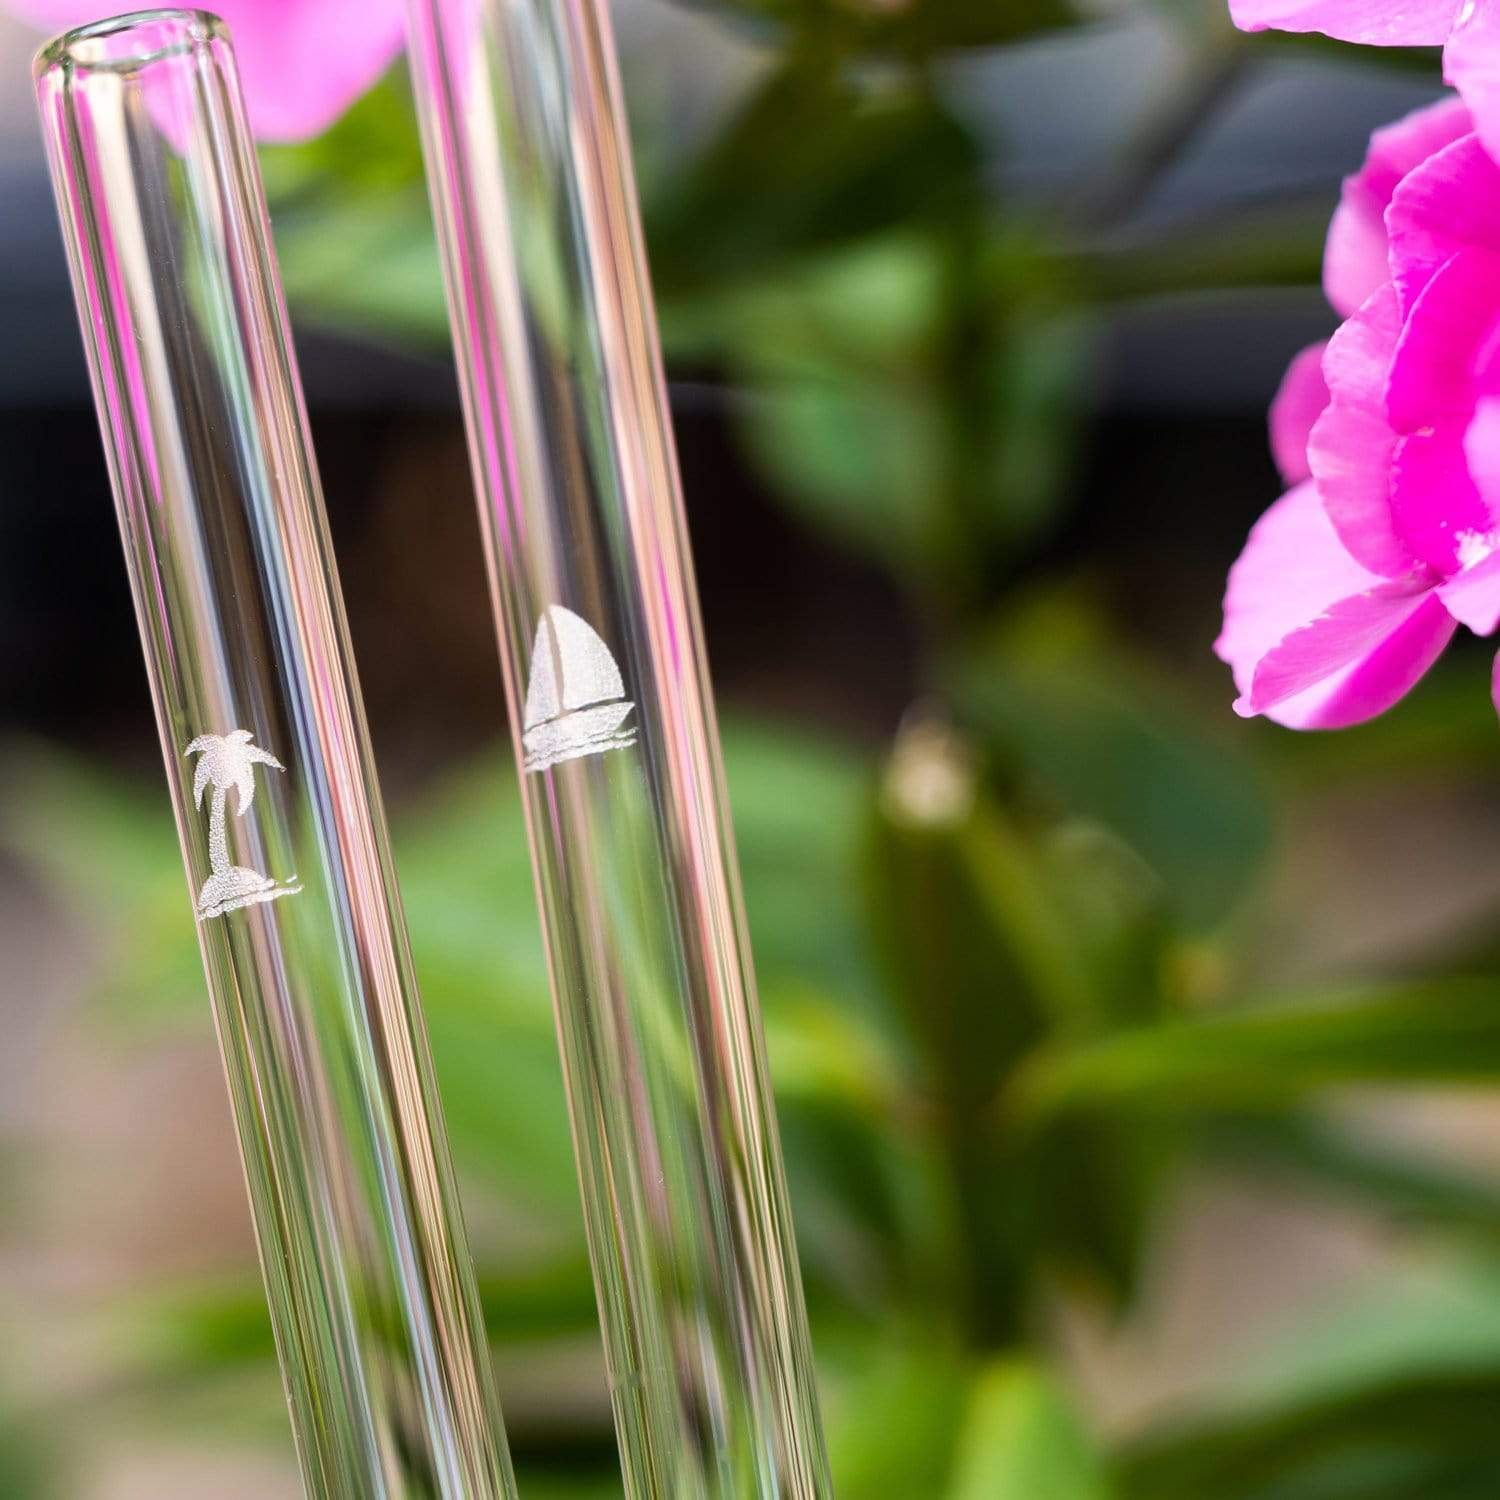 8PCS/set Creative Flower Glass Straw Reusable Glass Drinking Straws Cleaner  Brush Bent Glass Straws For